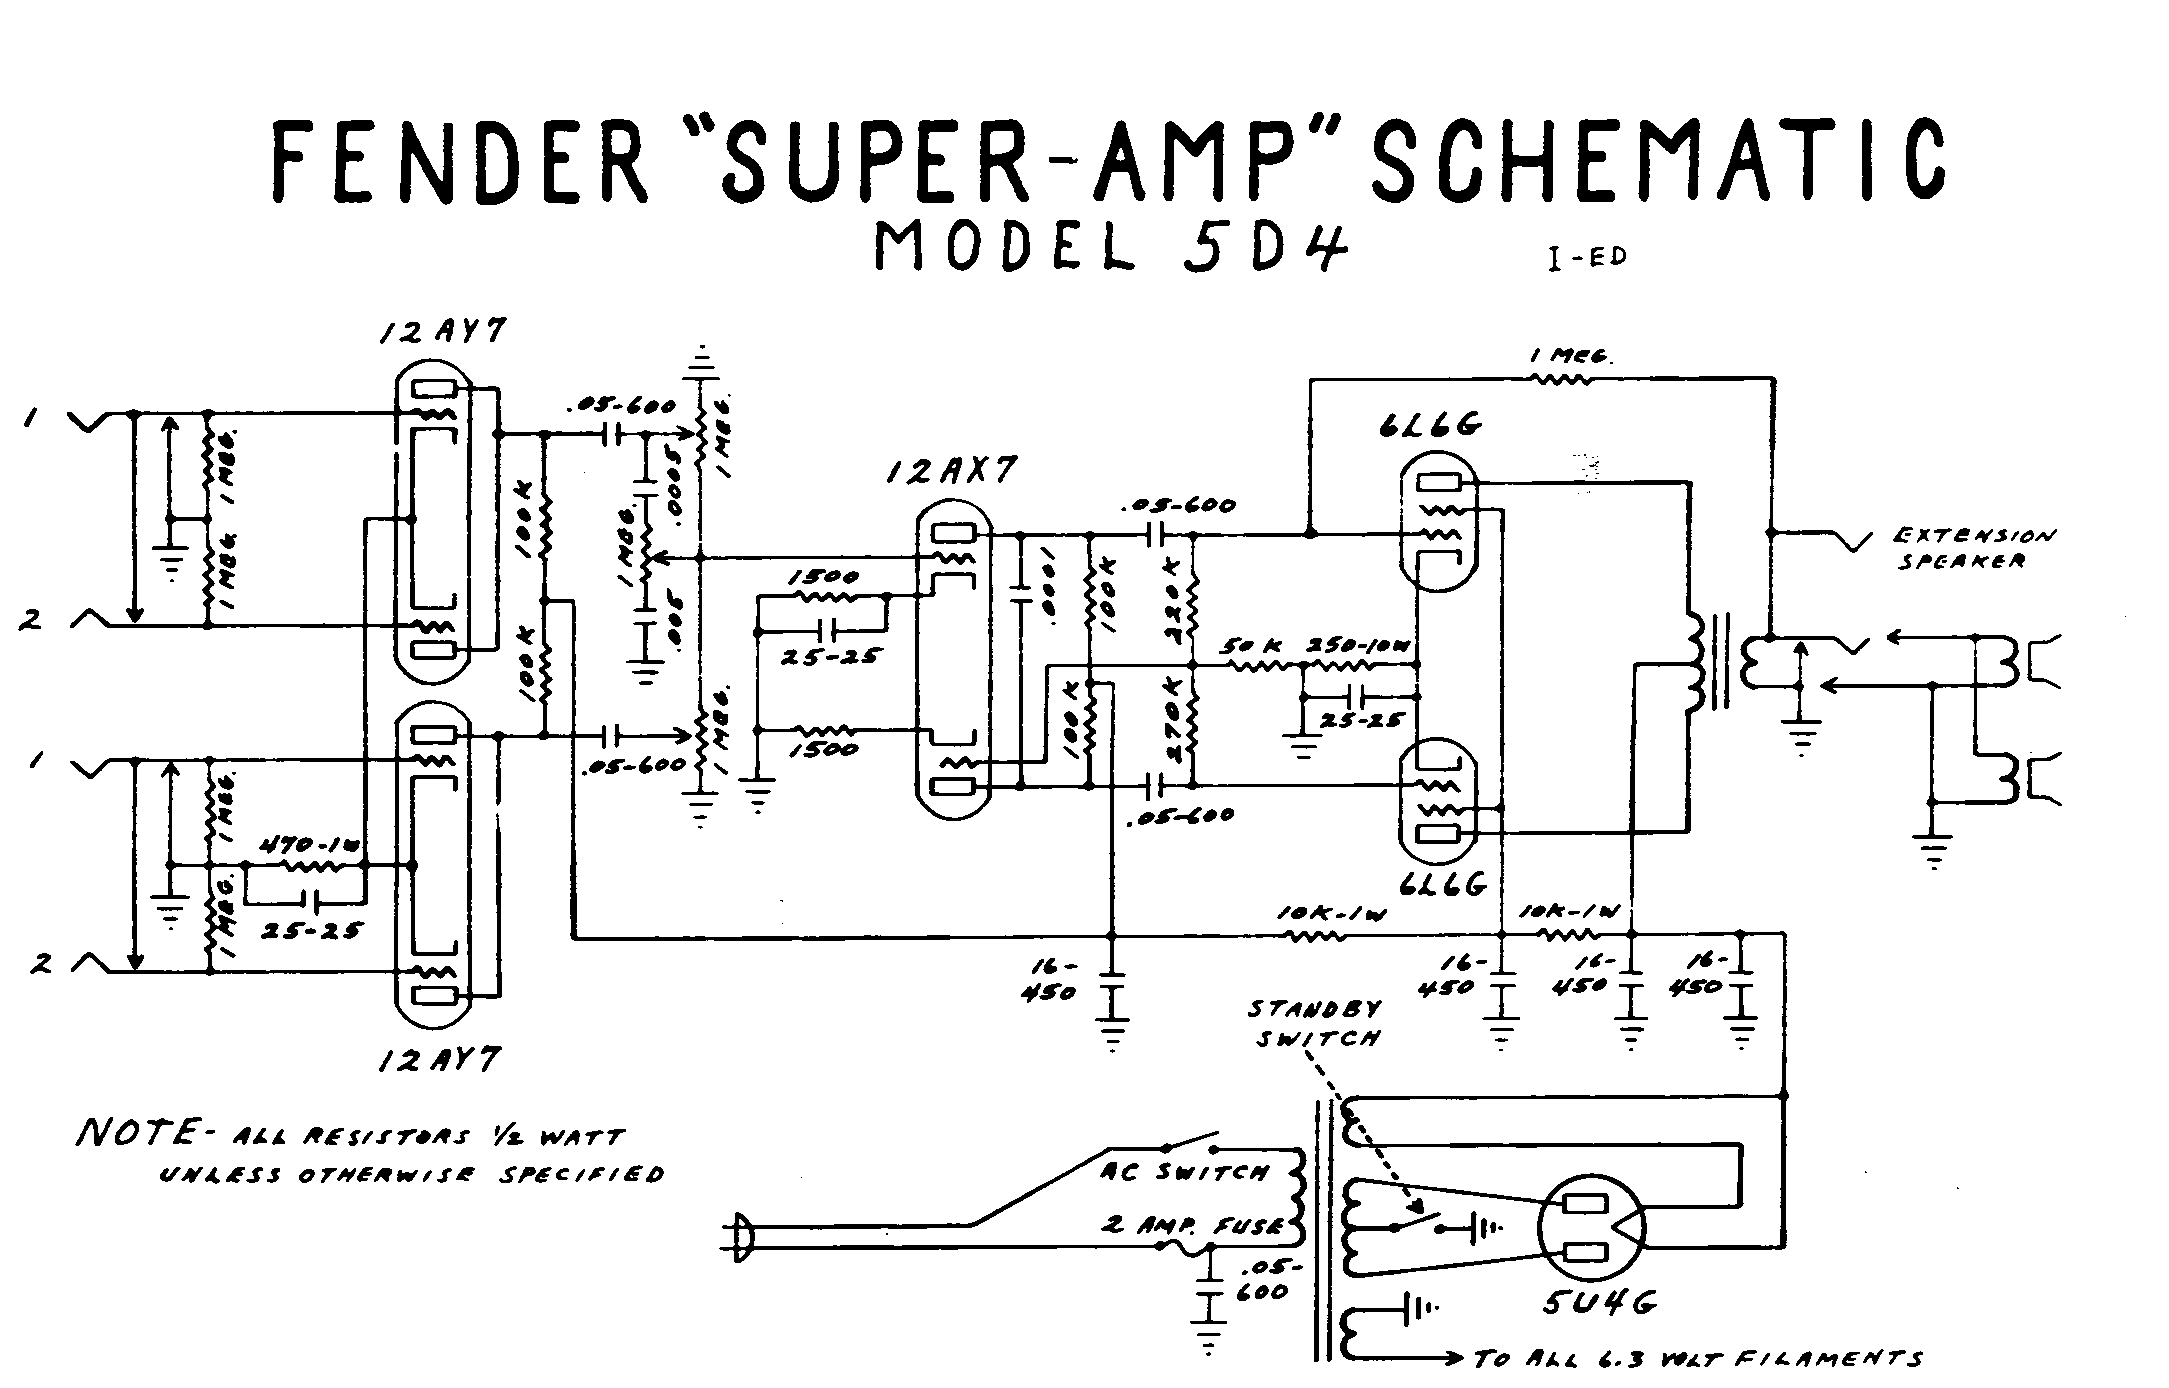 Fender Super Amp 5D4 Schematic